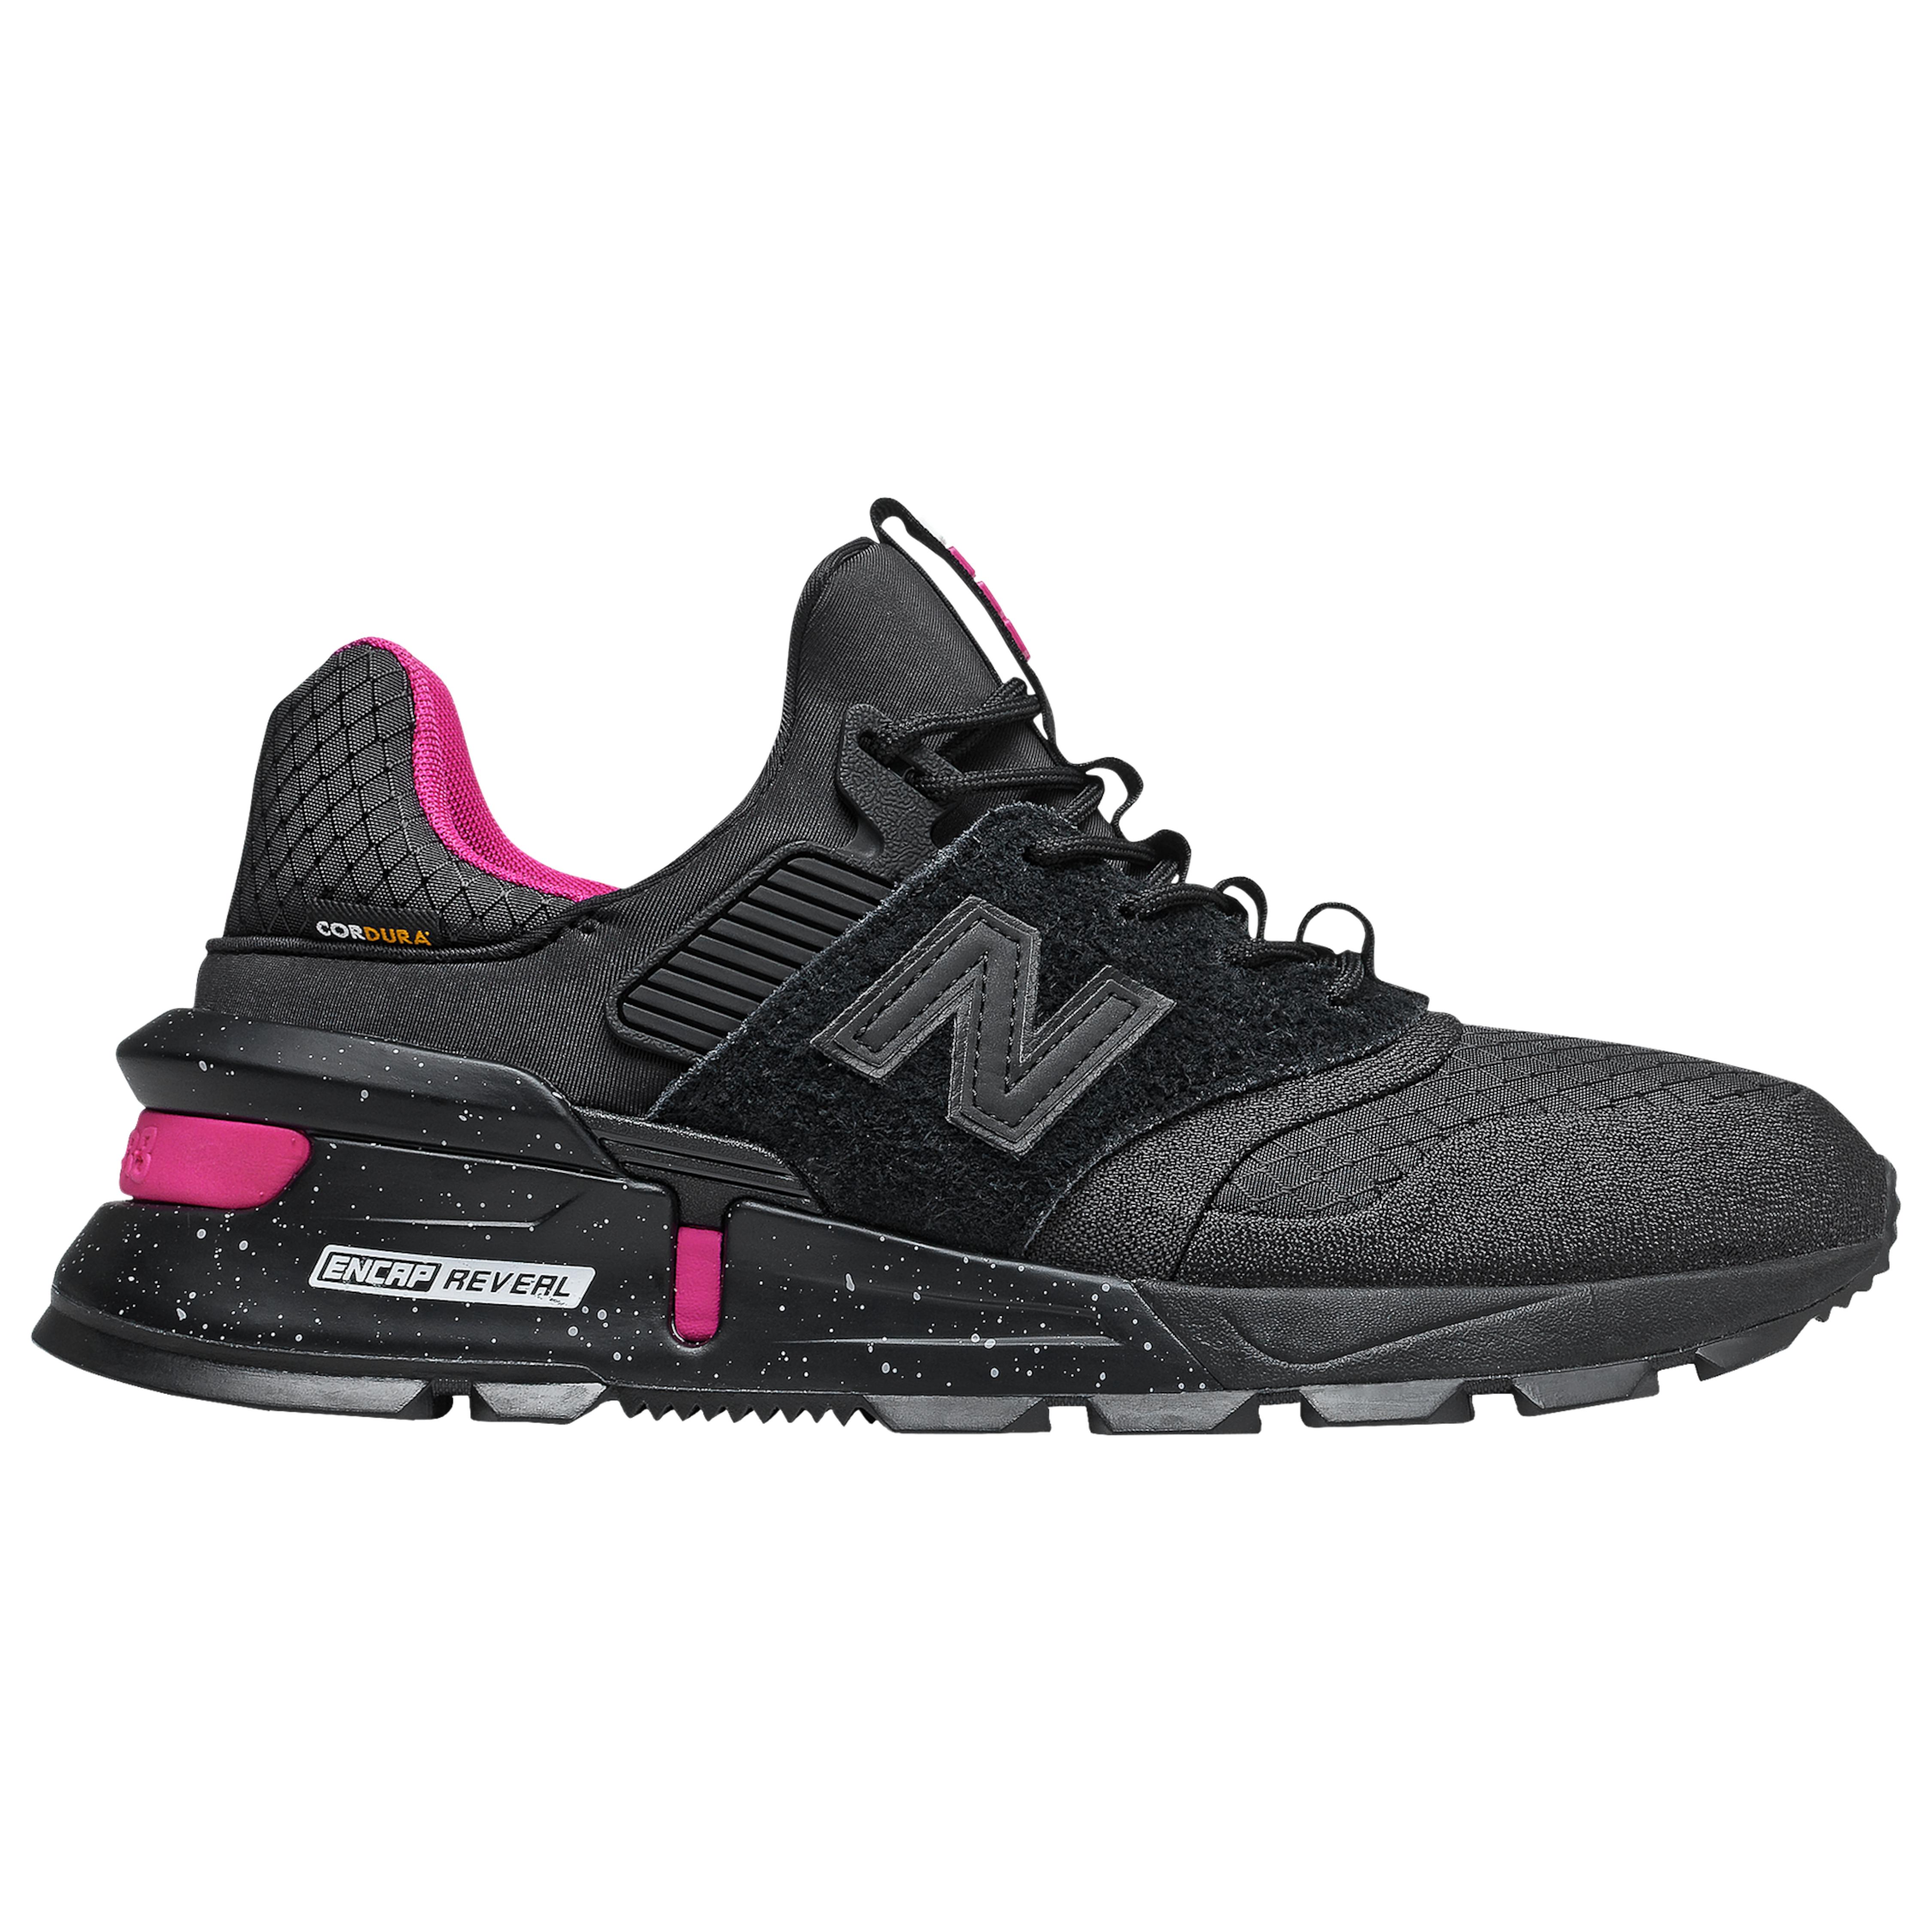 New Balance 997 Sport in Black/Pink (Black) for Men - Lyst